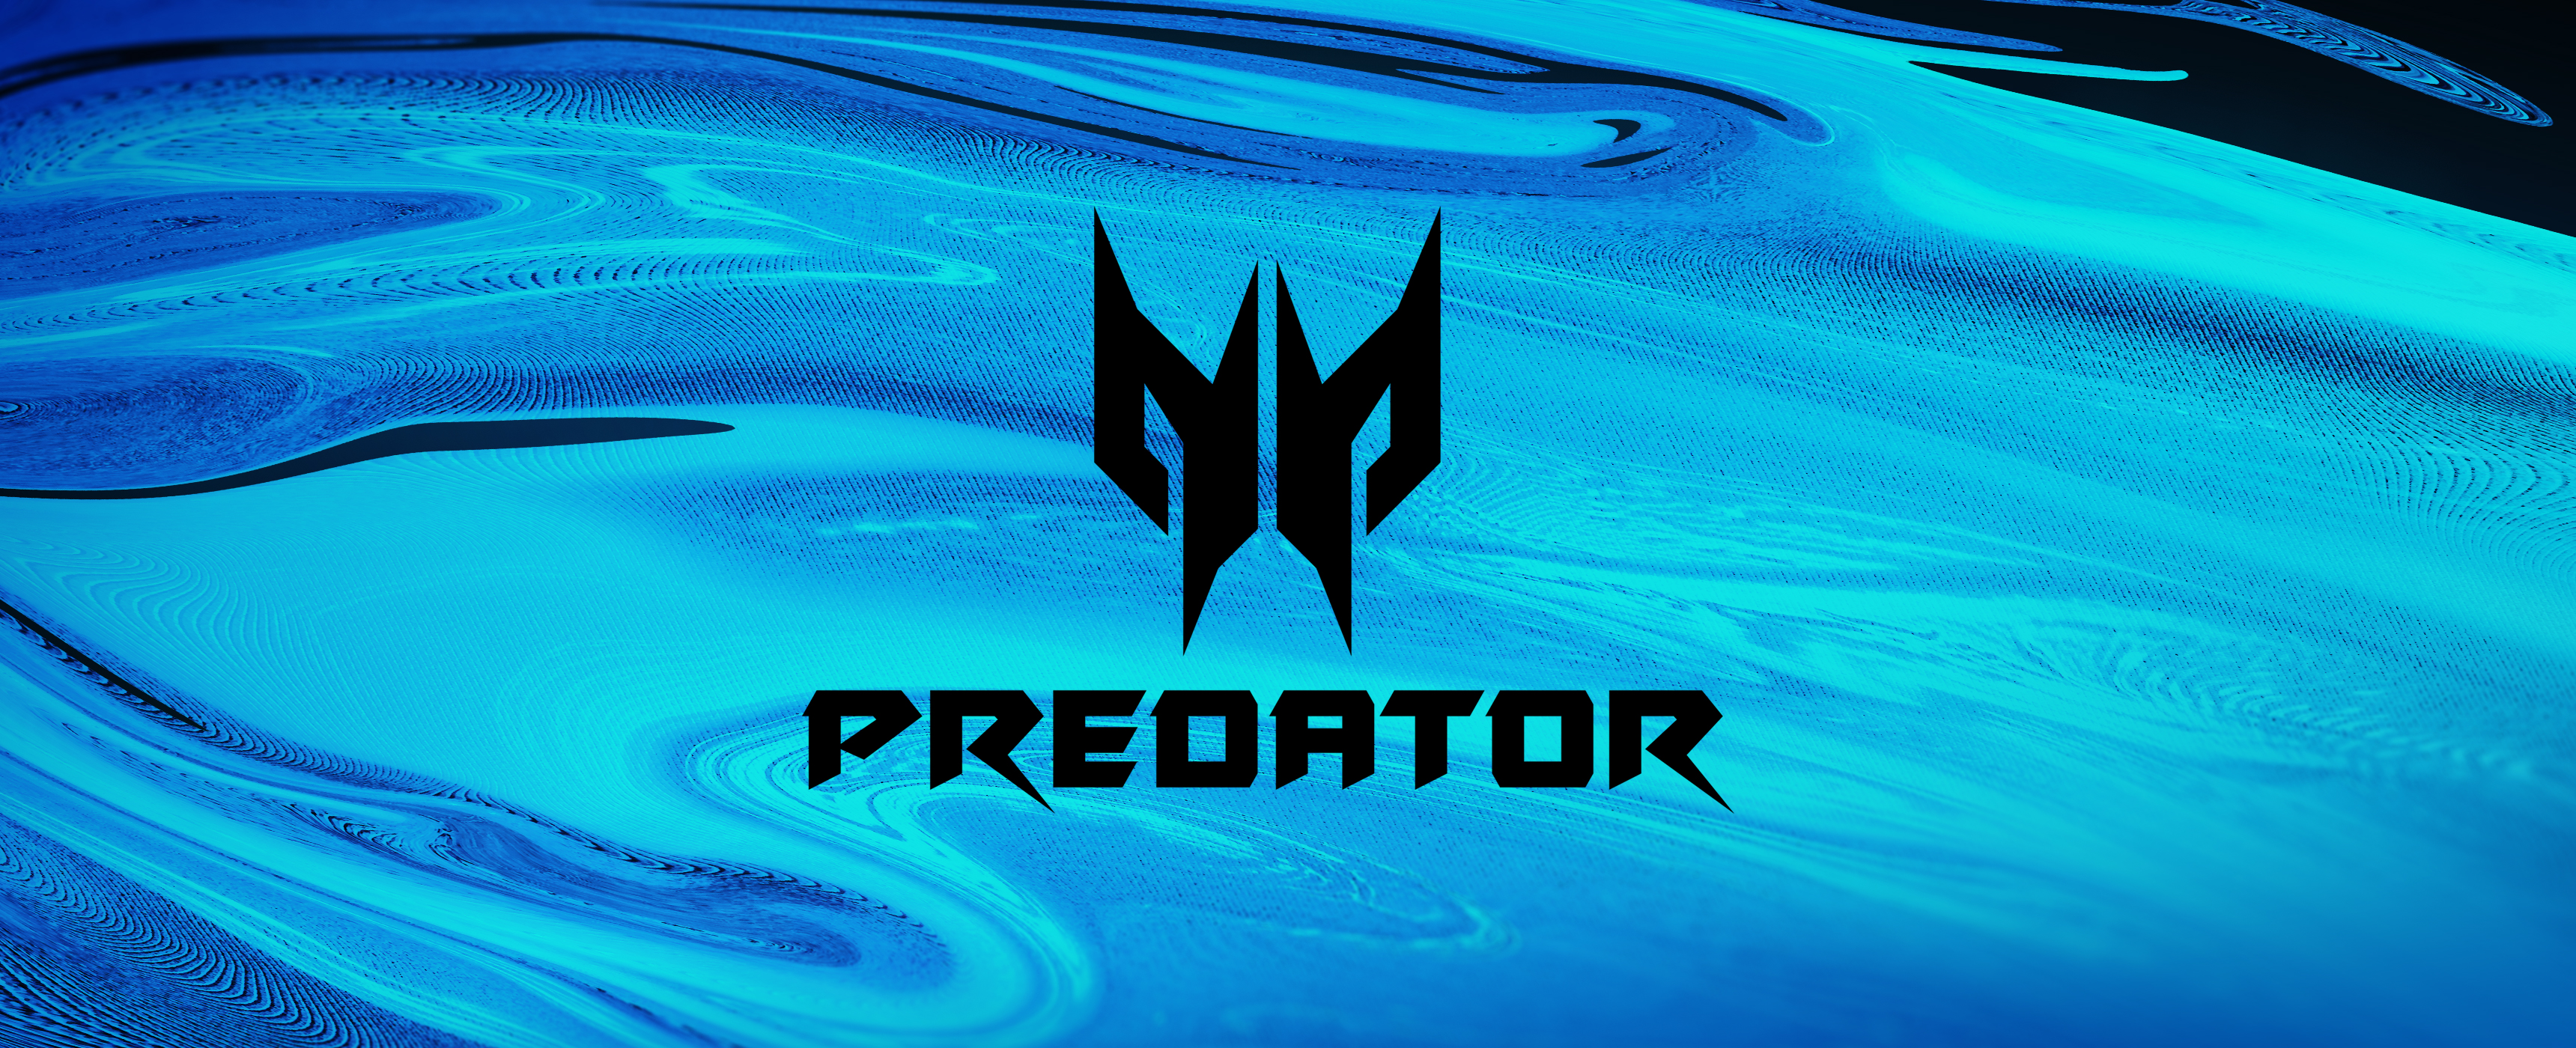 Acer Predator Logo Wallpapers - Wallpaper Cave